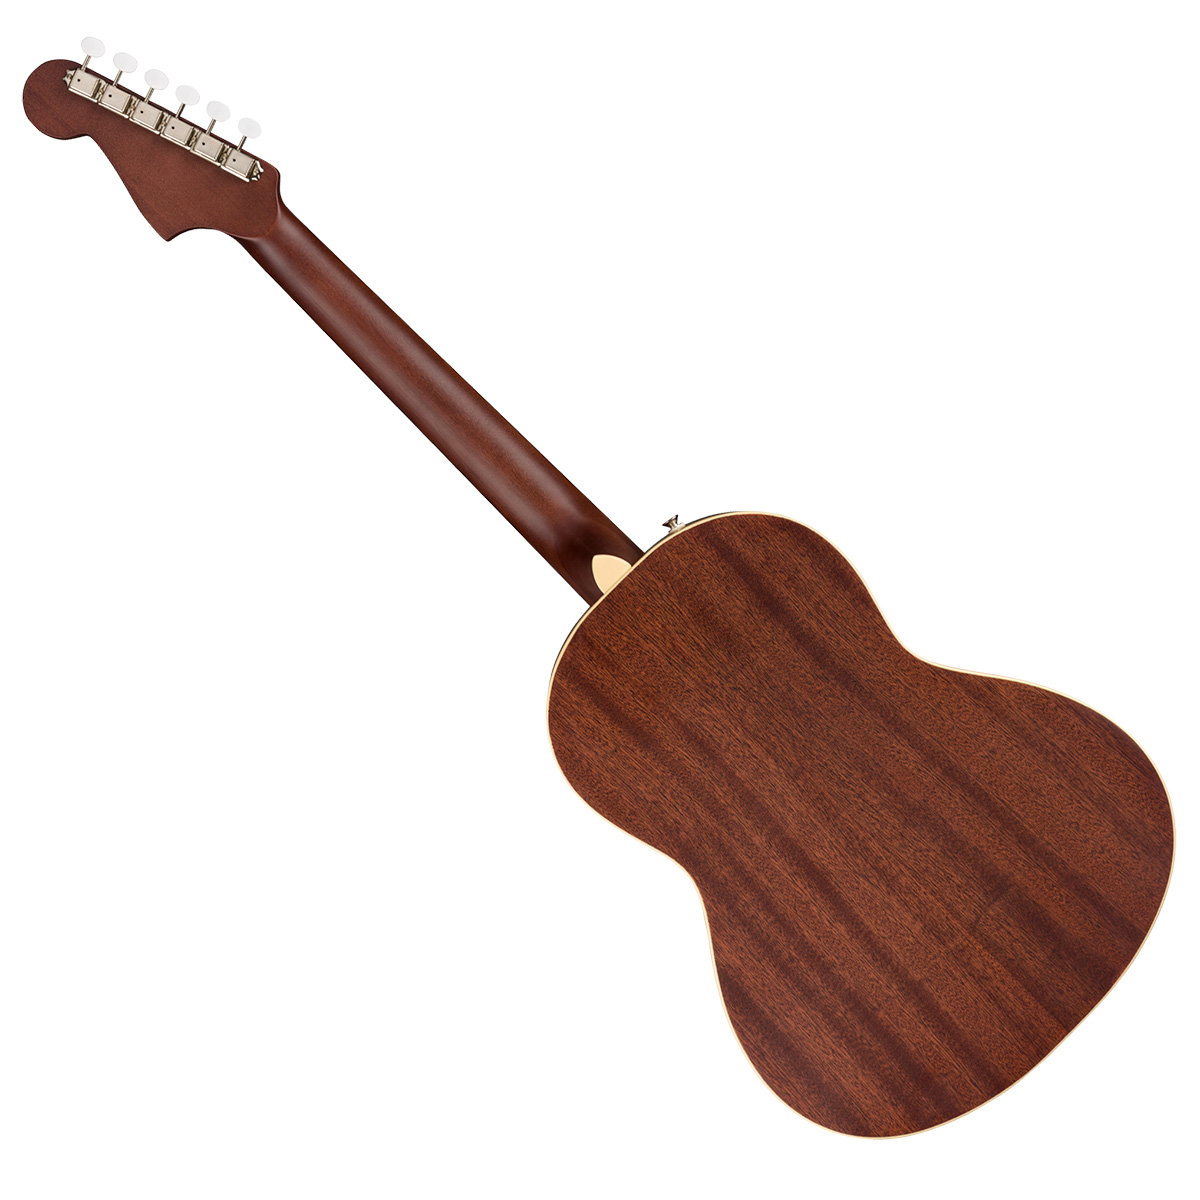 Fender Sonoran Mini Natural アコースティックギター初心者12点セット 